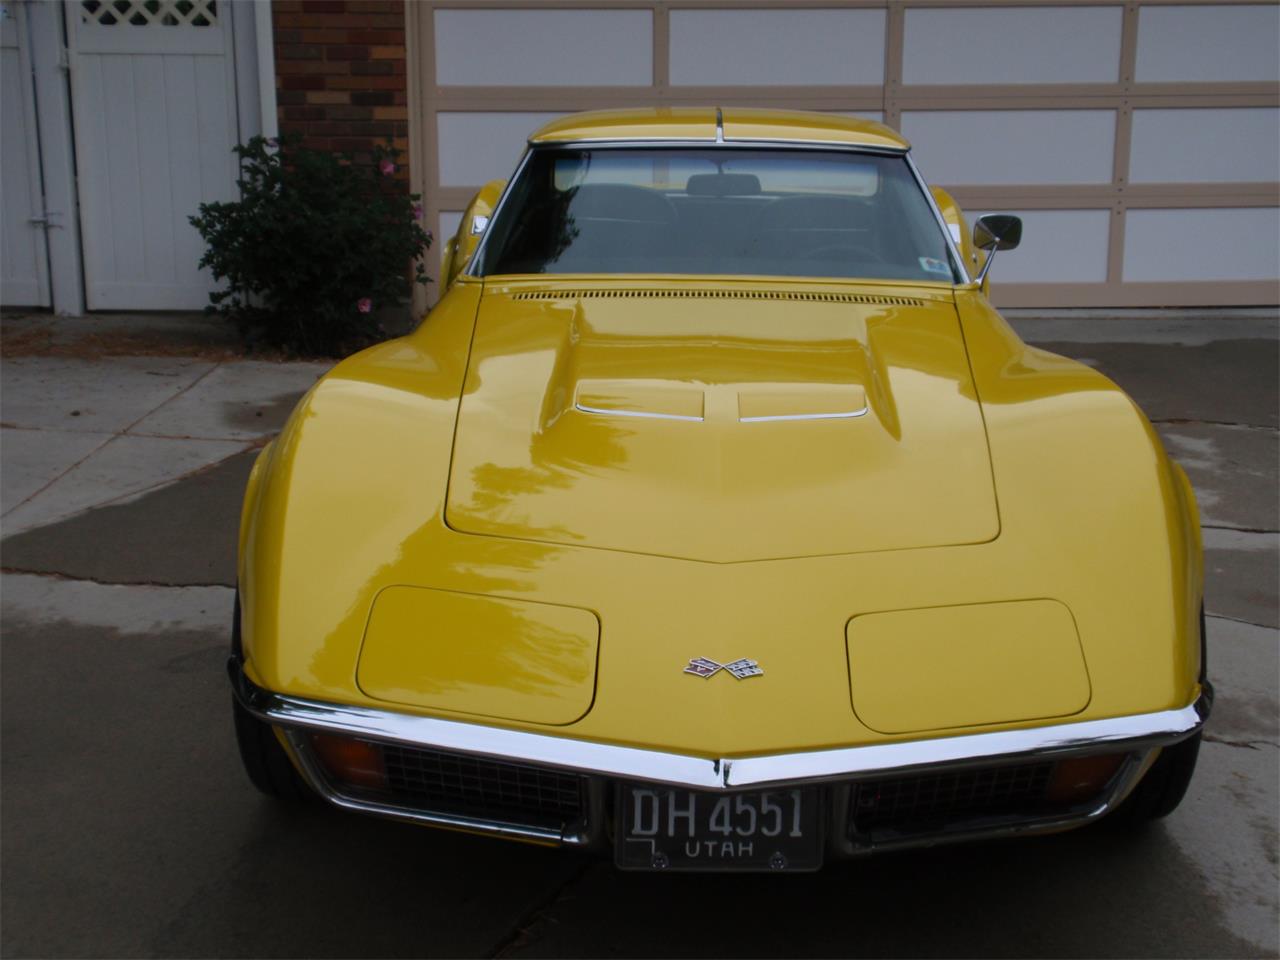 For Sale at Auction: 1972 Chevrolet Corvette for sale in Billings, MT